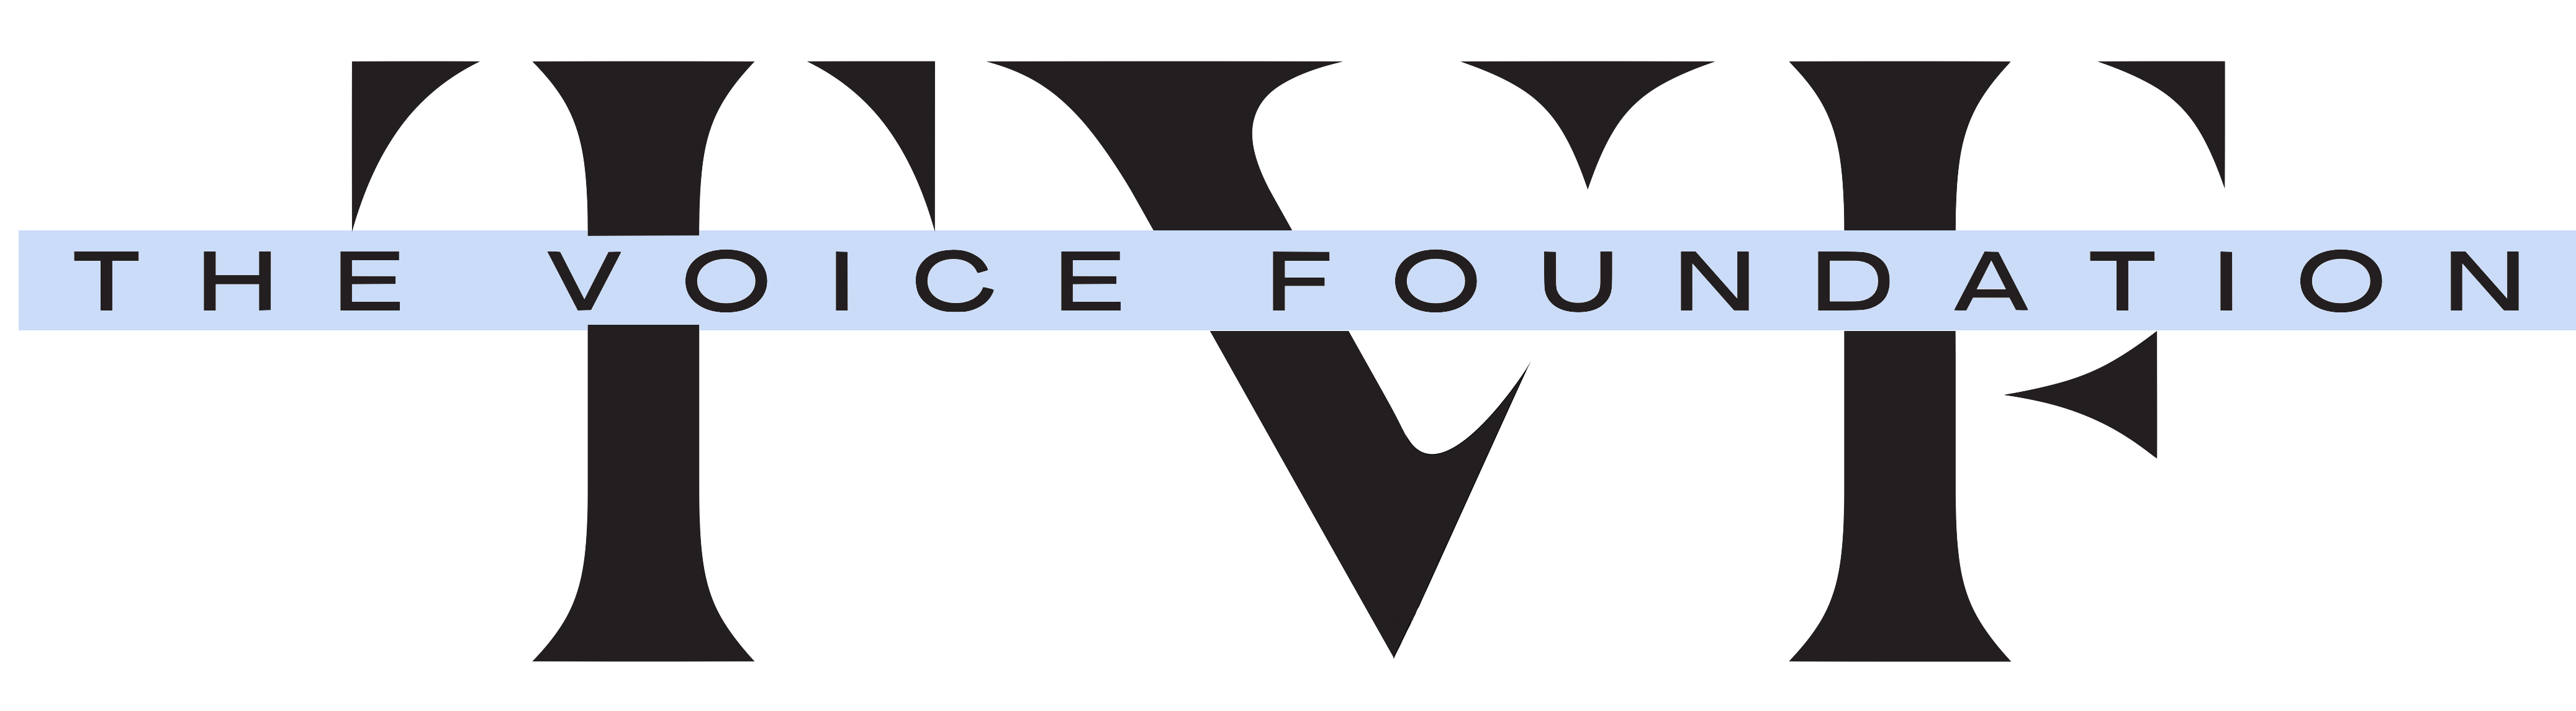 The Voice Foundation Logo